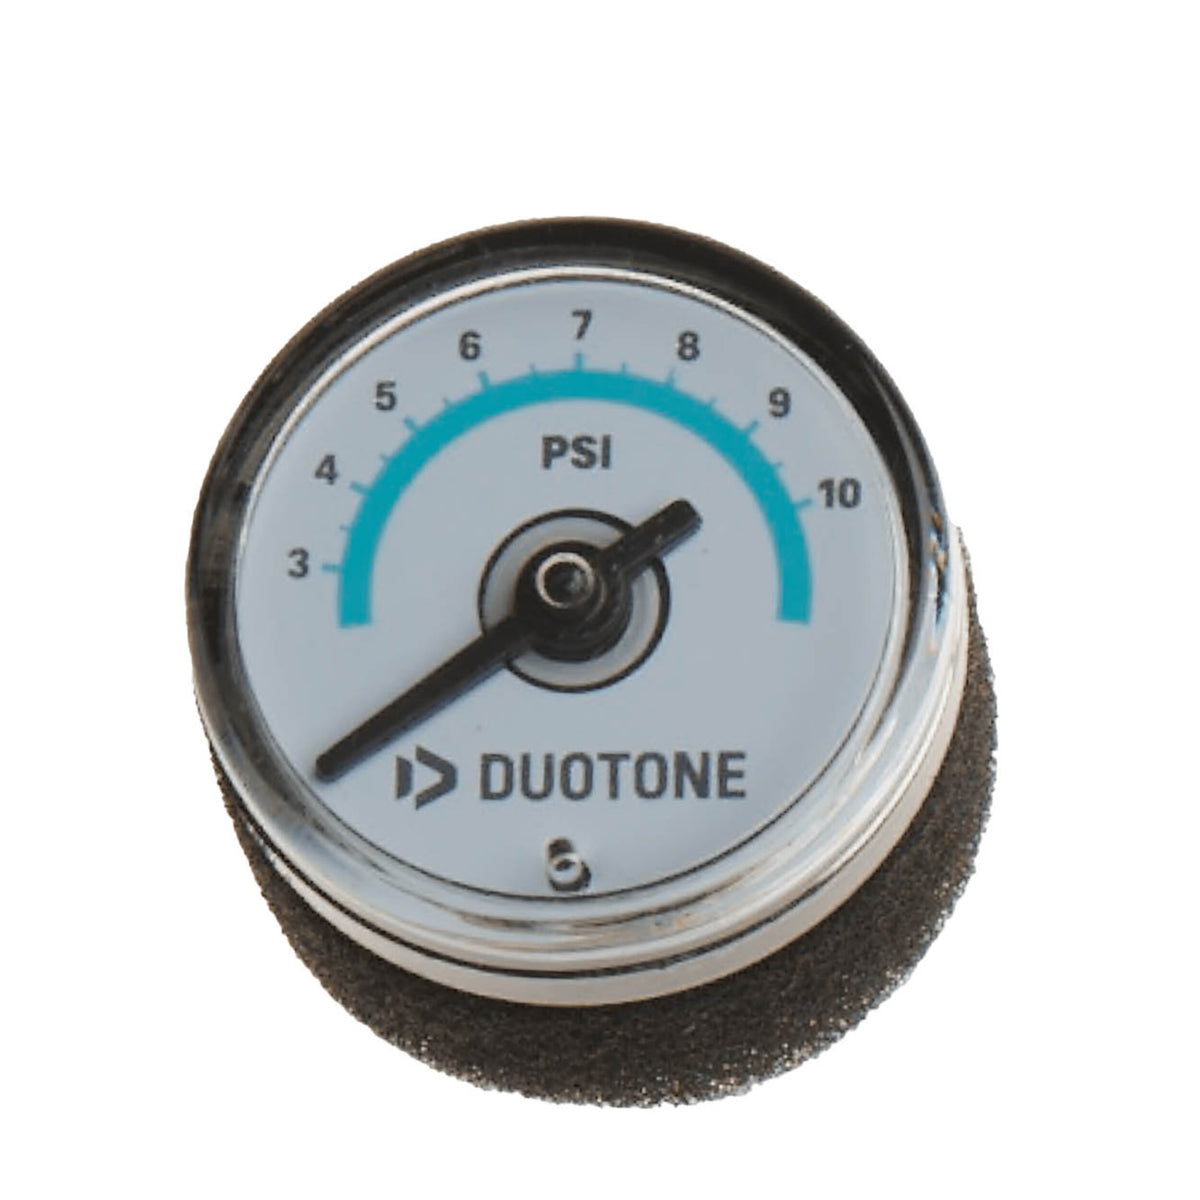 Pressure gauge for kitesurf pumps DUOTONE PRESSURE GAUGE FOR DUOTONE PUMP